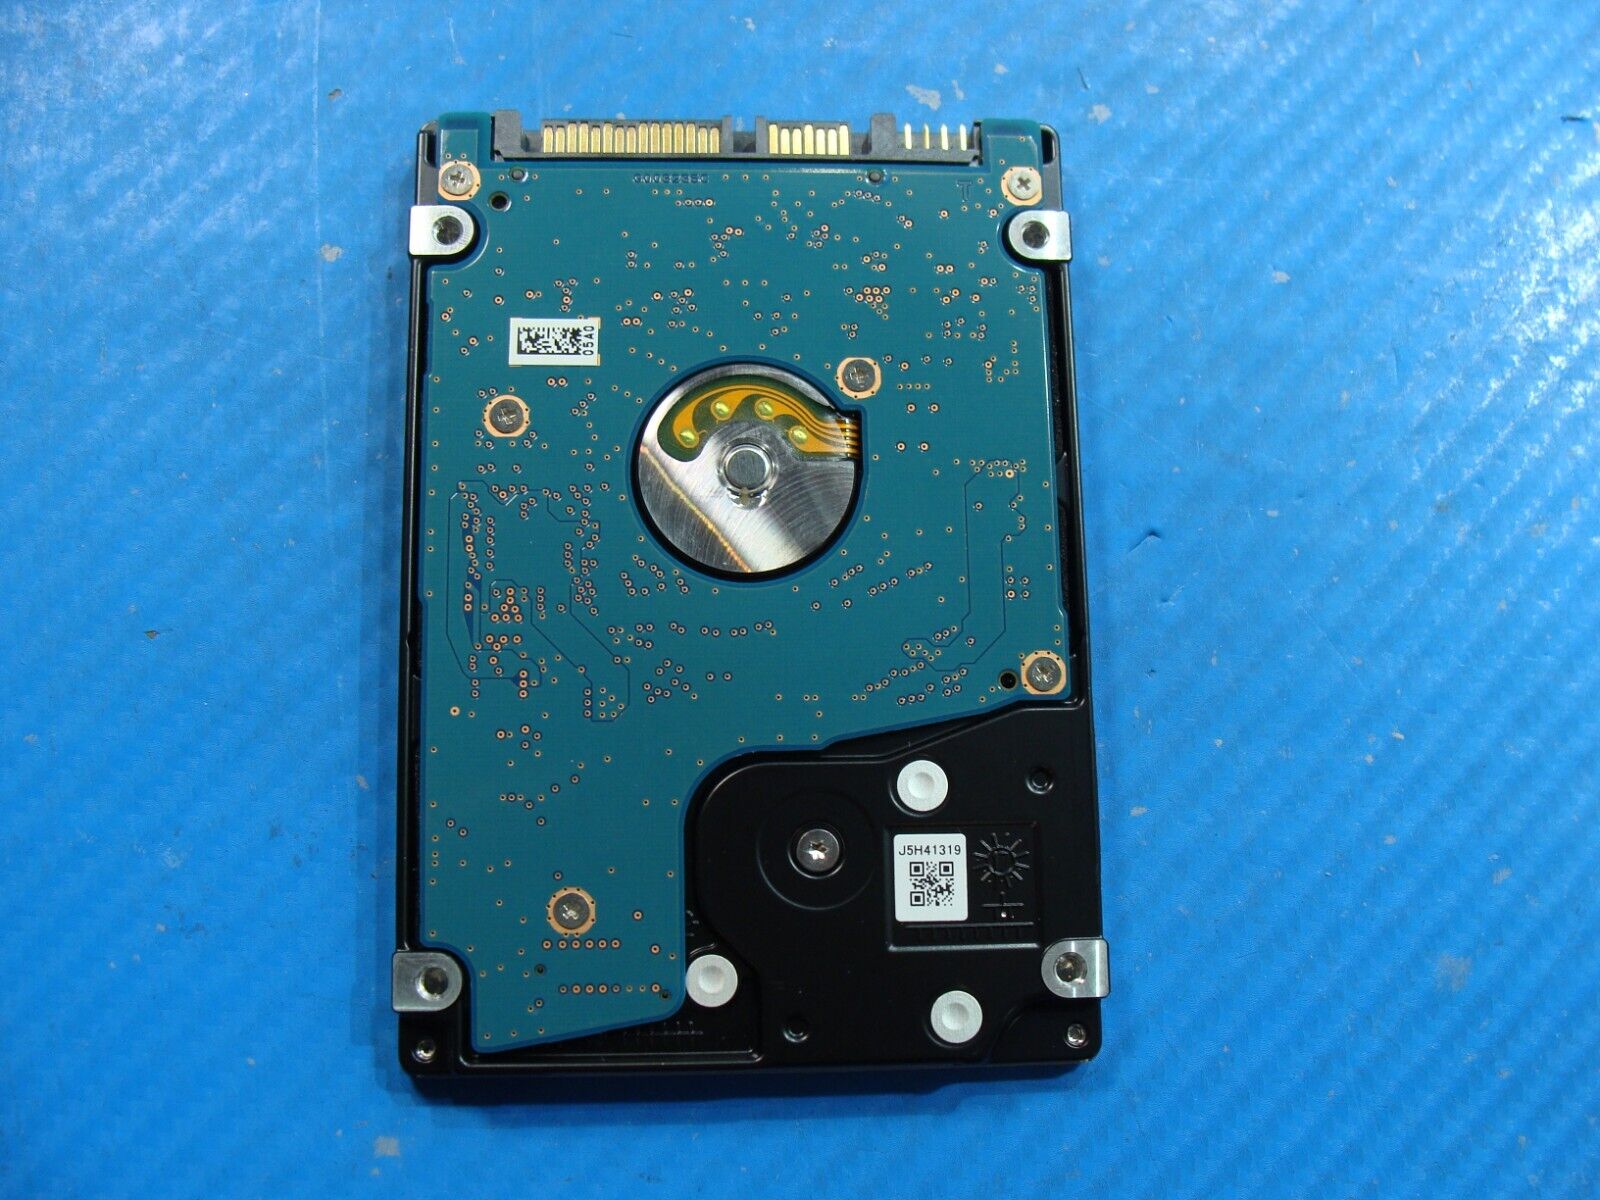 HP 11m-ad013dx Toshiba 500GB Sata 2.5